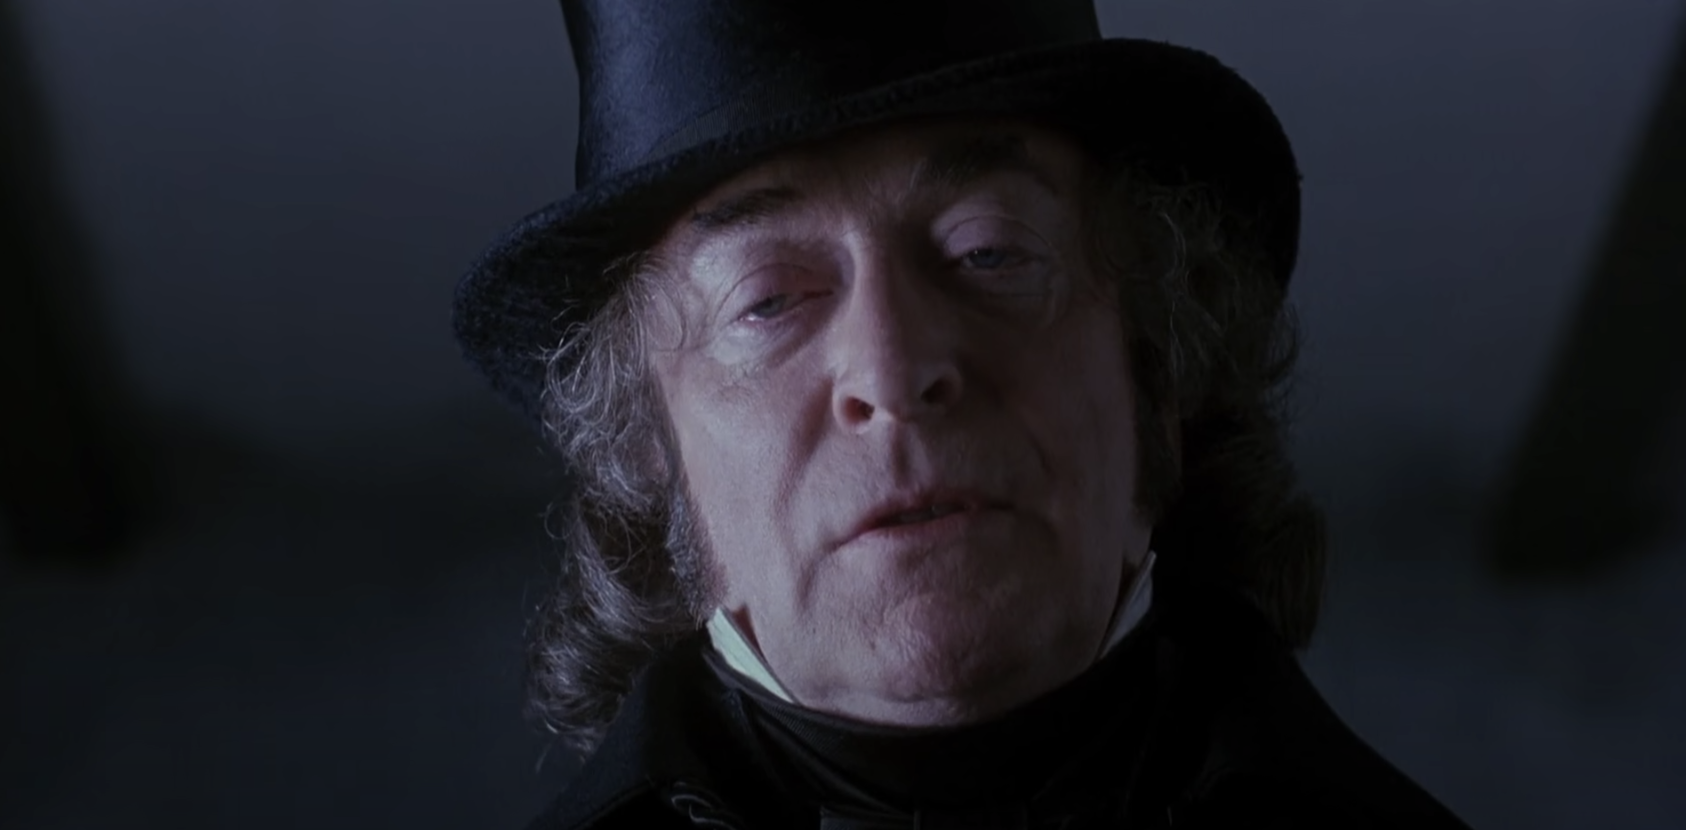 Michael Caine as Ebenezer Scrooge